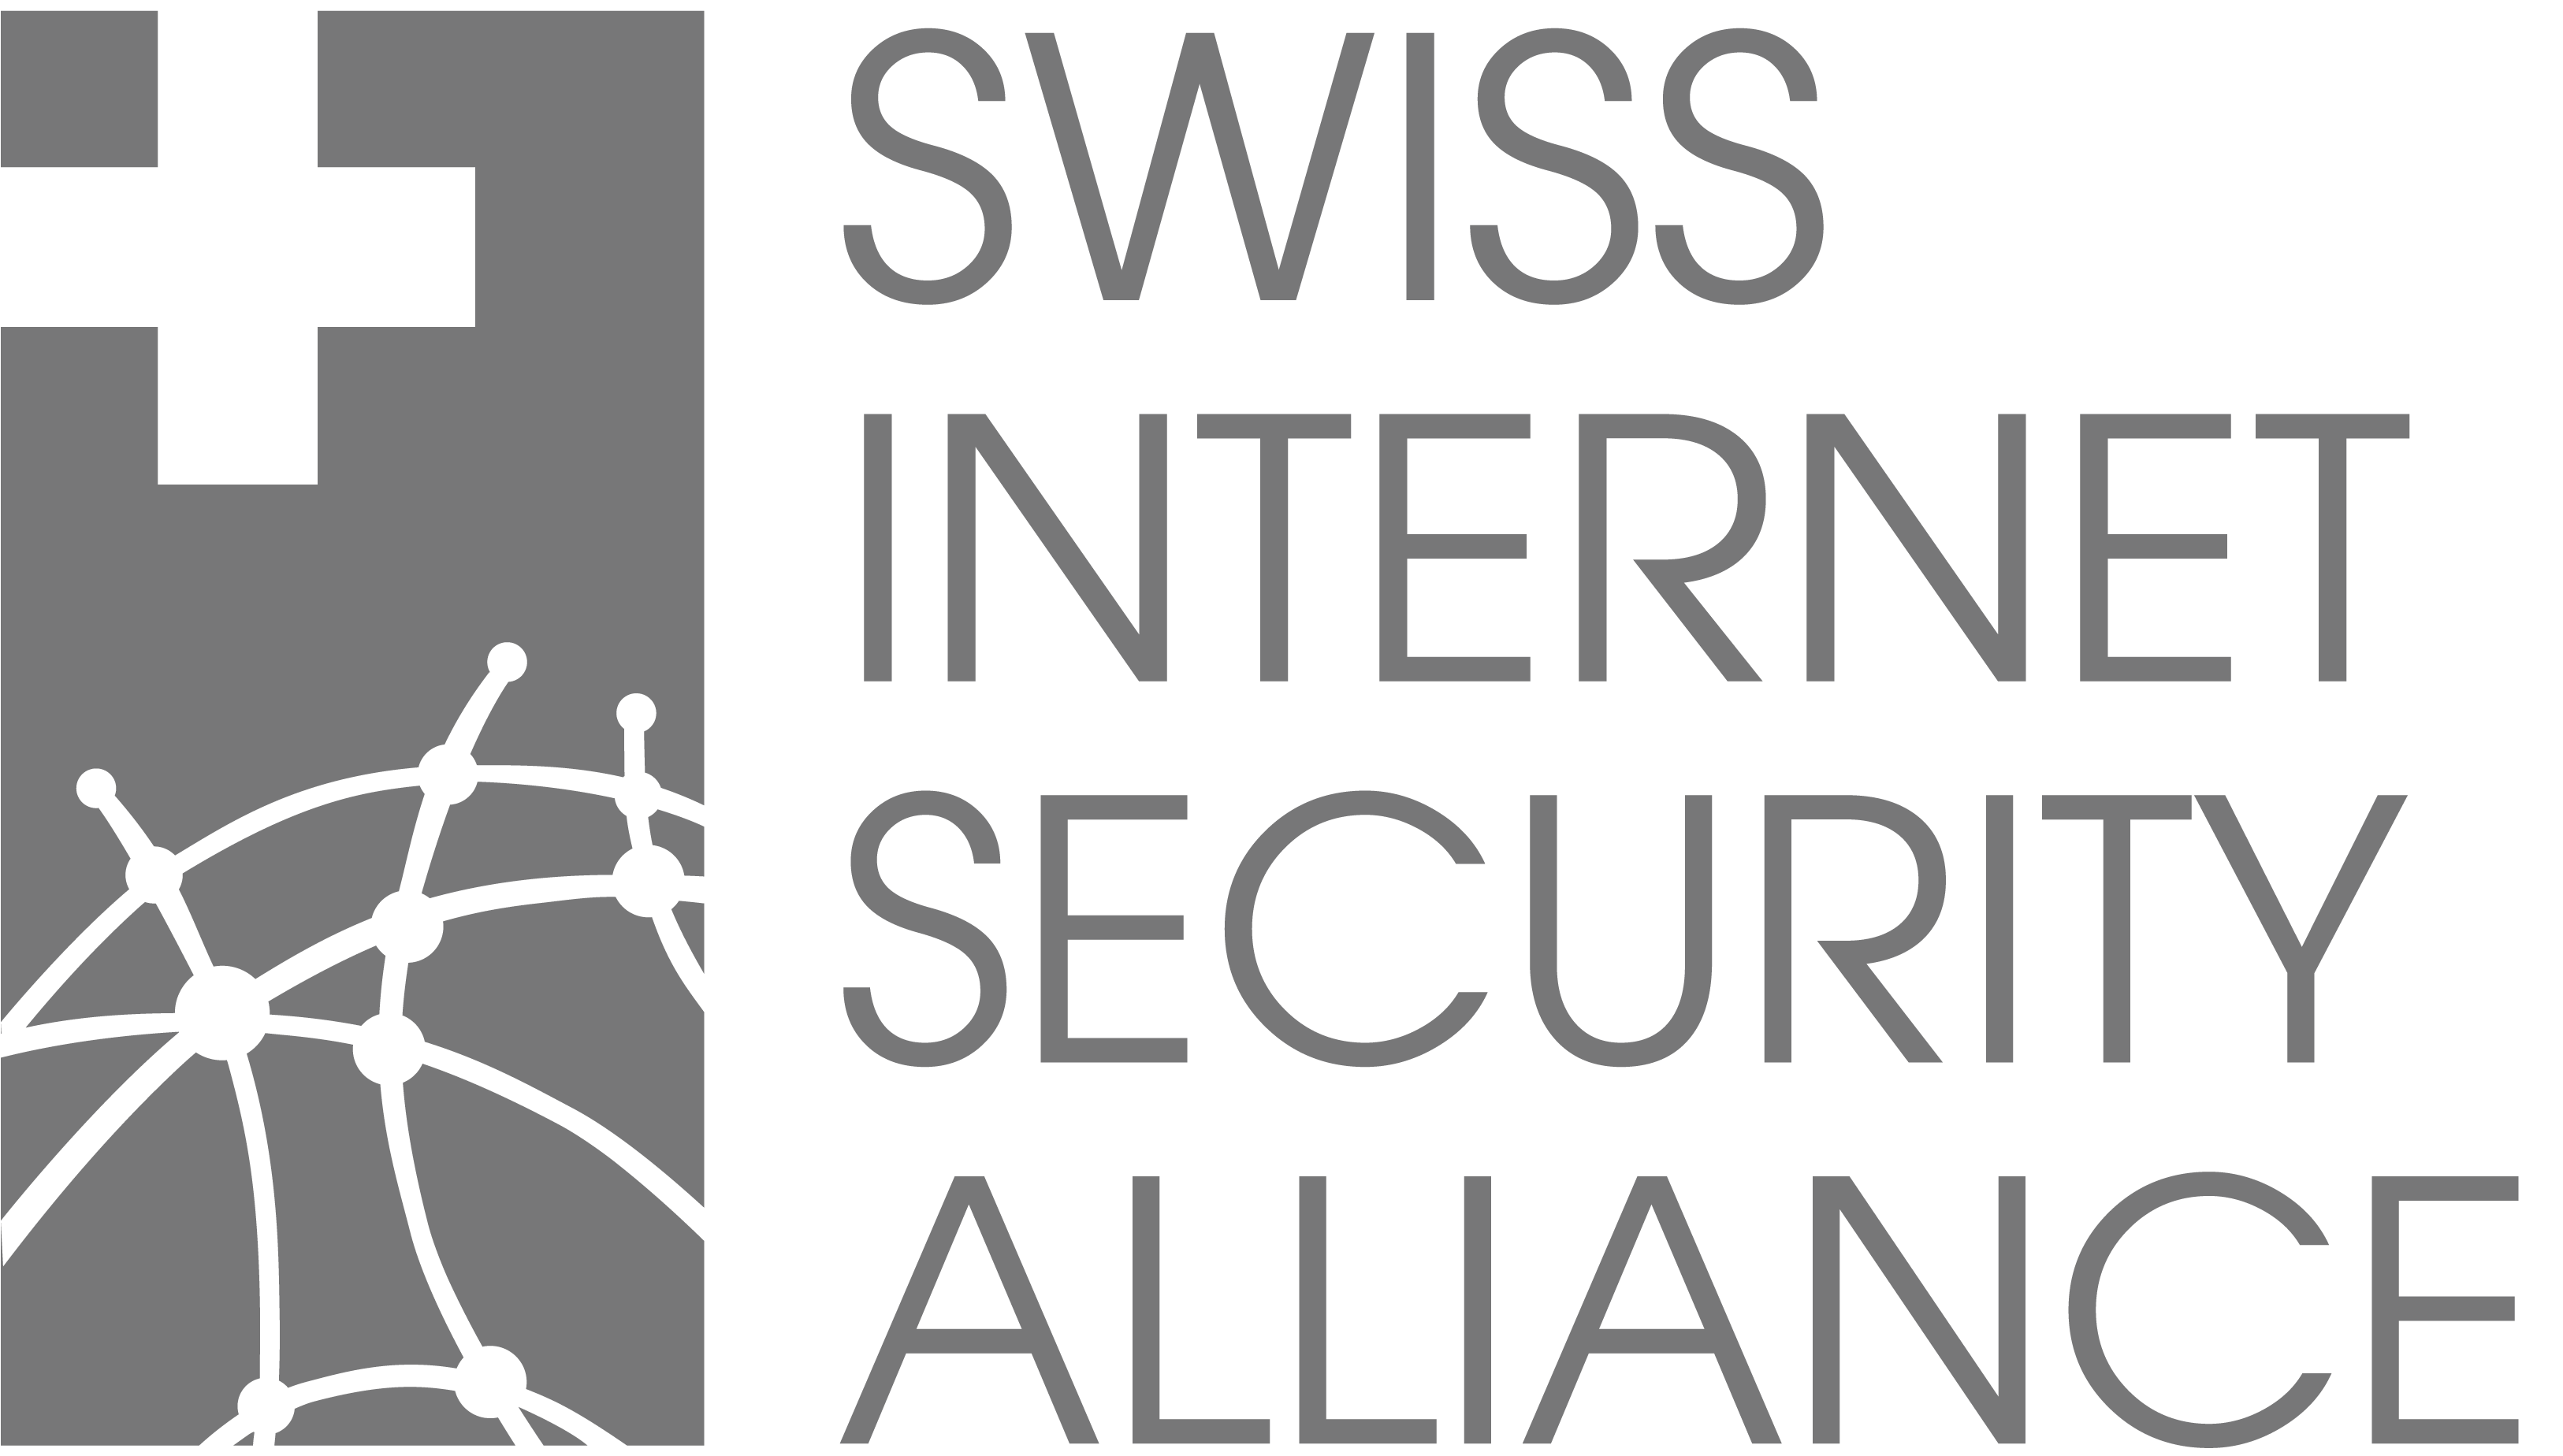 Swiss Internet Security Alliance logo